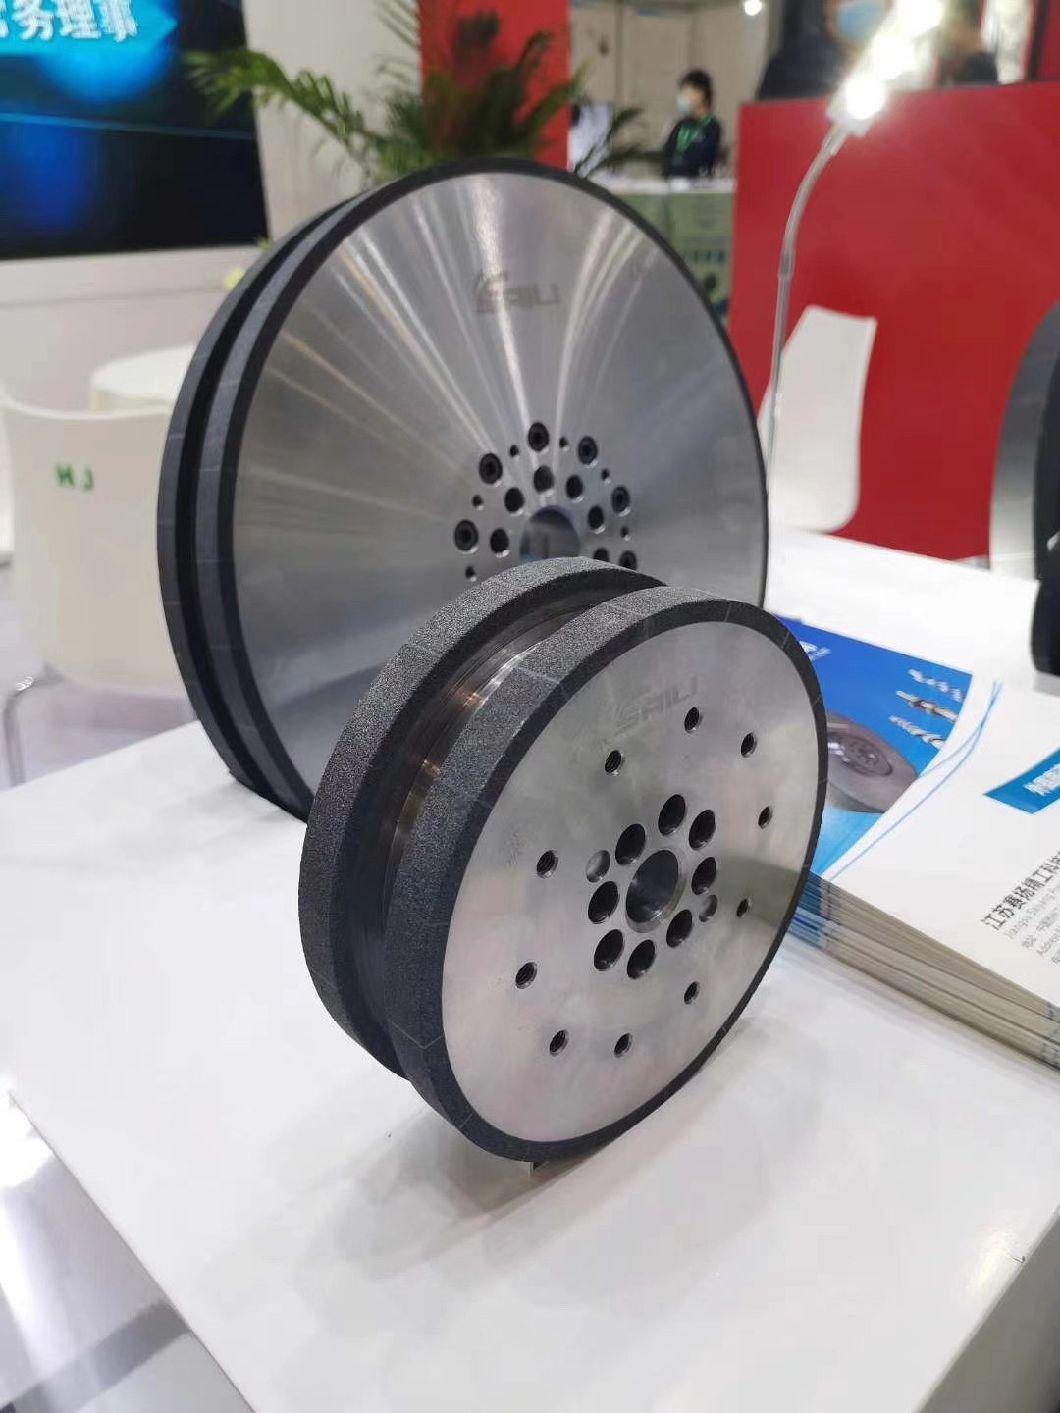 Superabrasive Diamond and CBN Wheels, Grinding Wheels for Flute Grinding, Grinding Wheels for Gashing